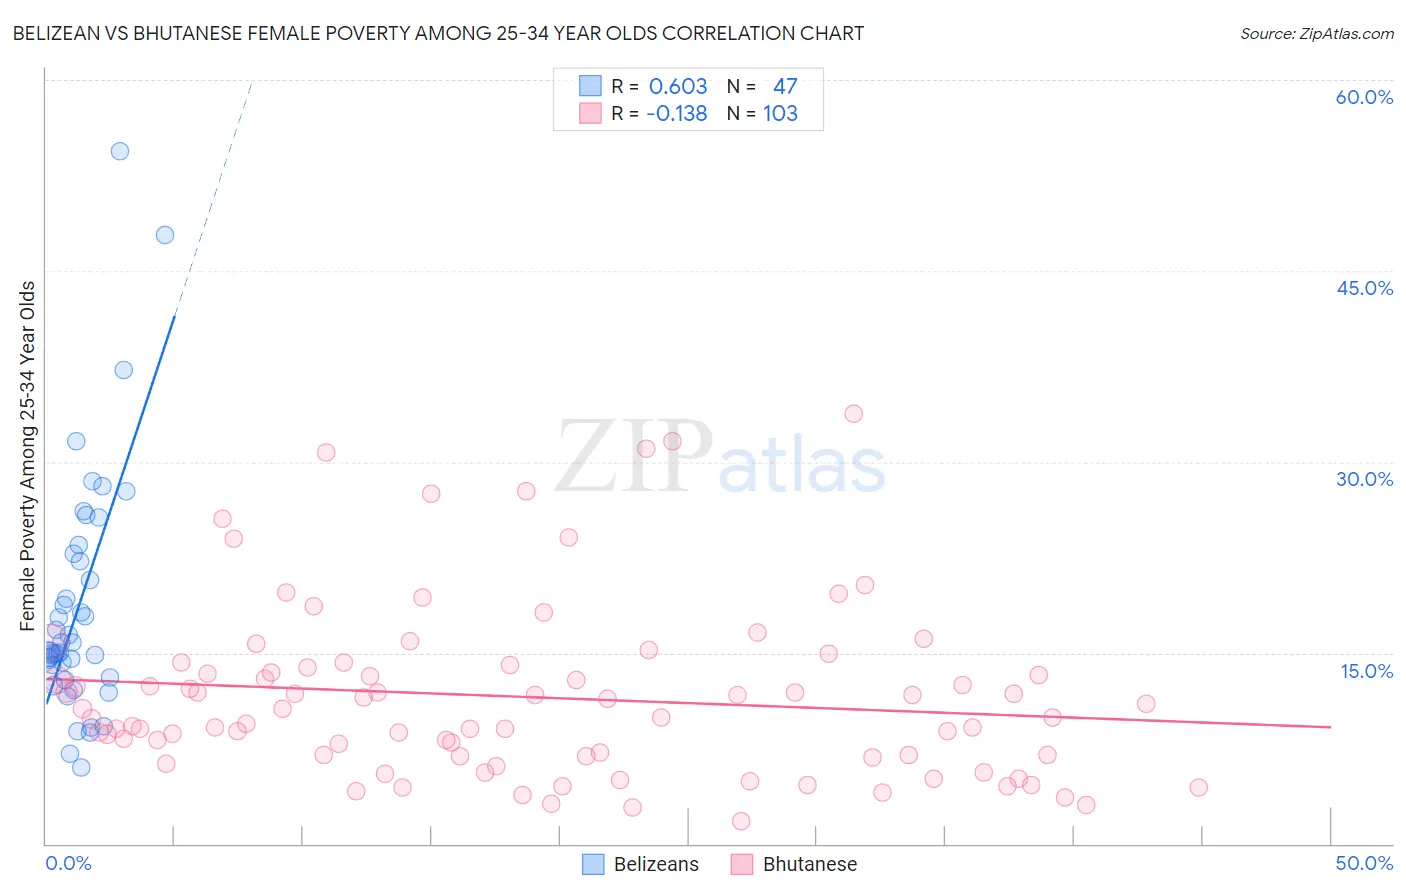 Belizean vs Bhutanese Female Poverty Among 25-34 Year Olds